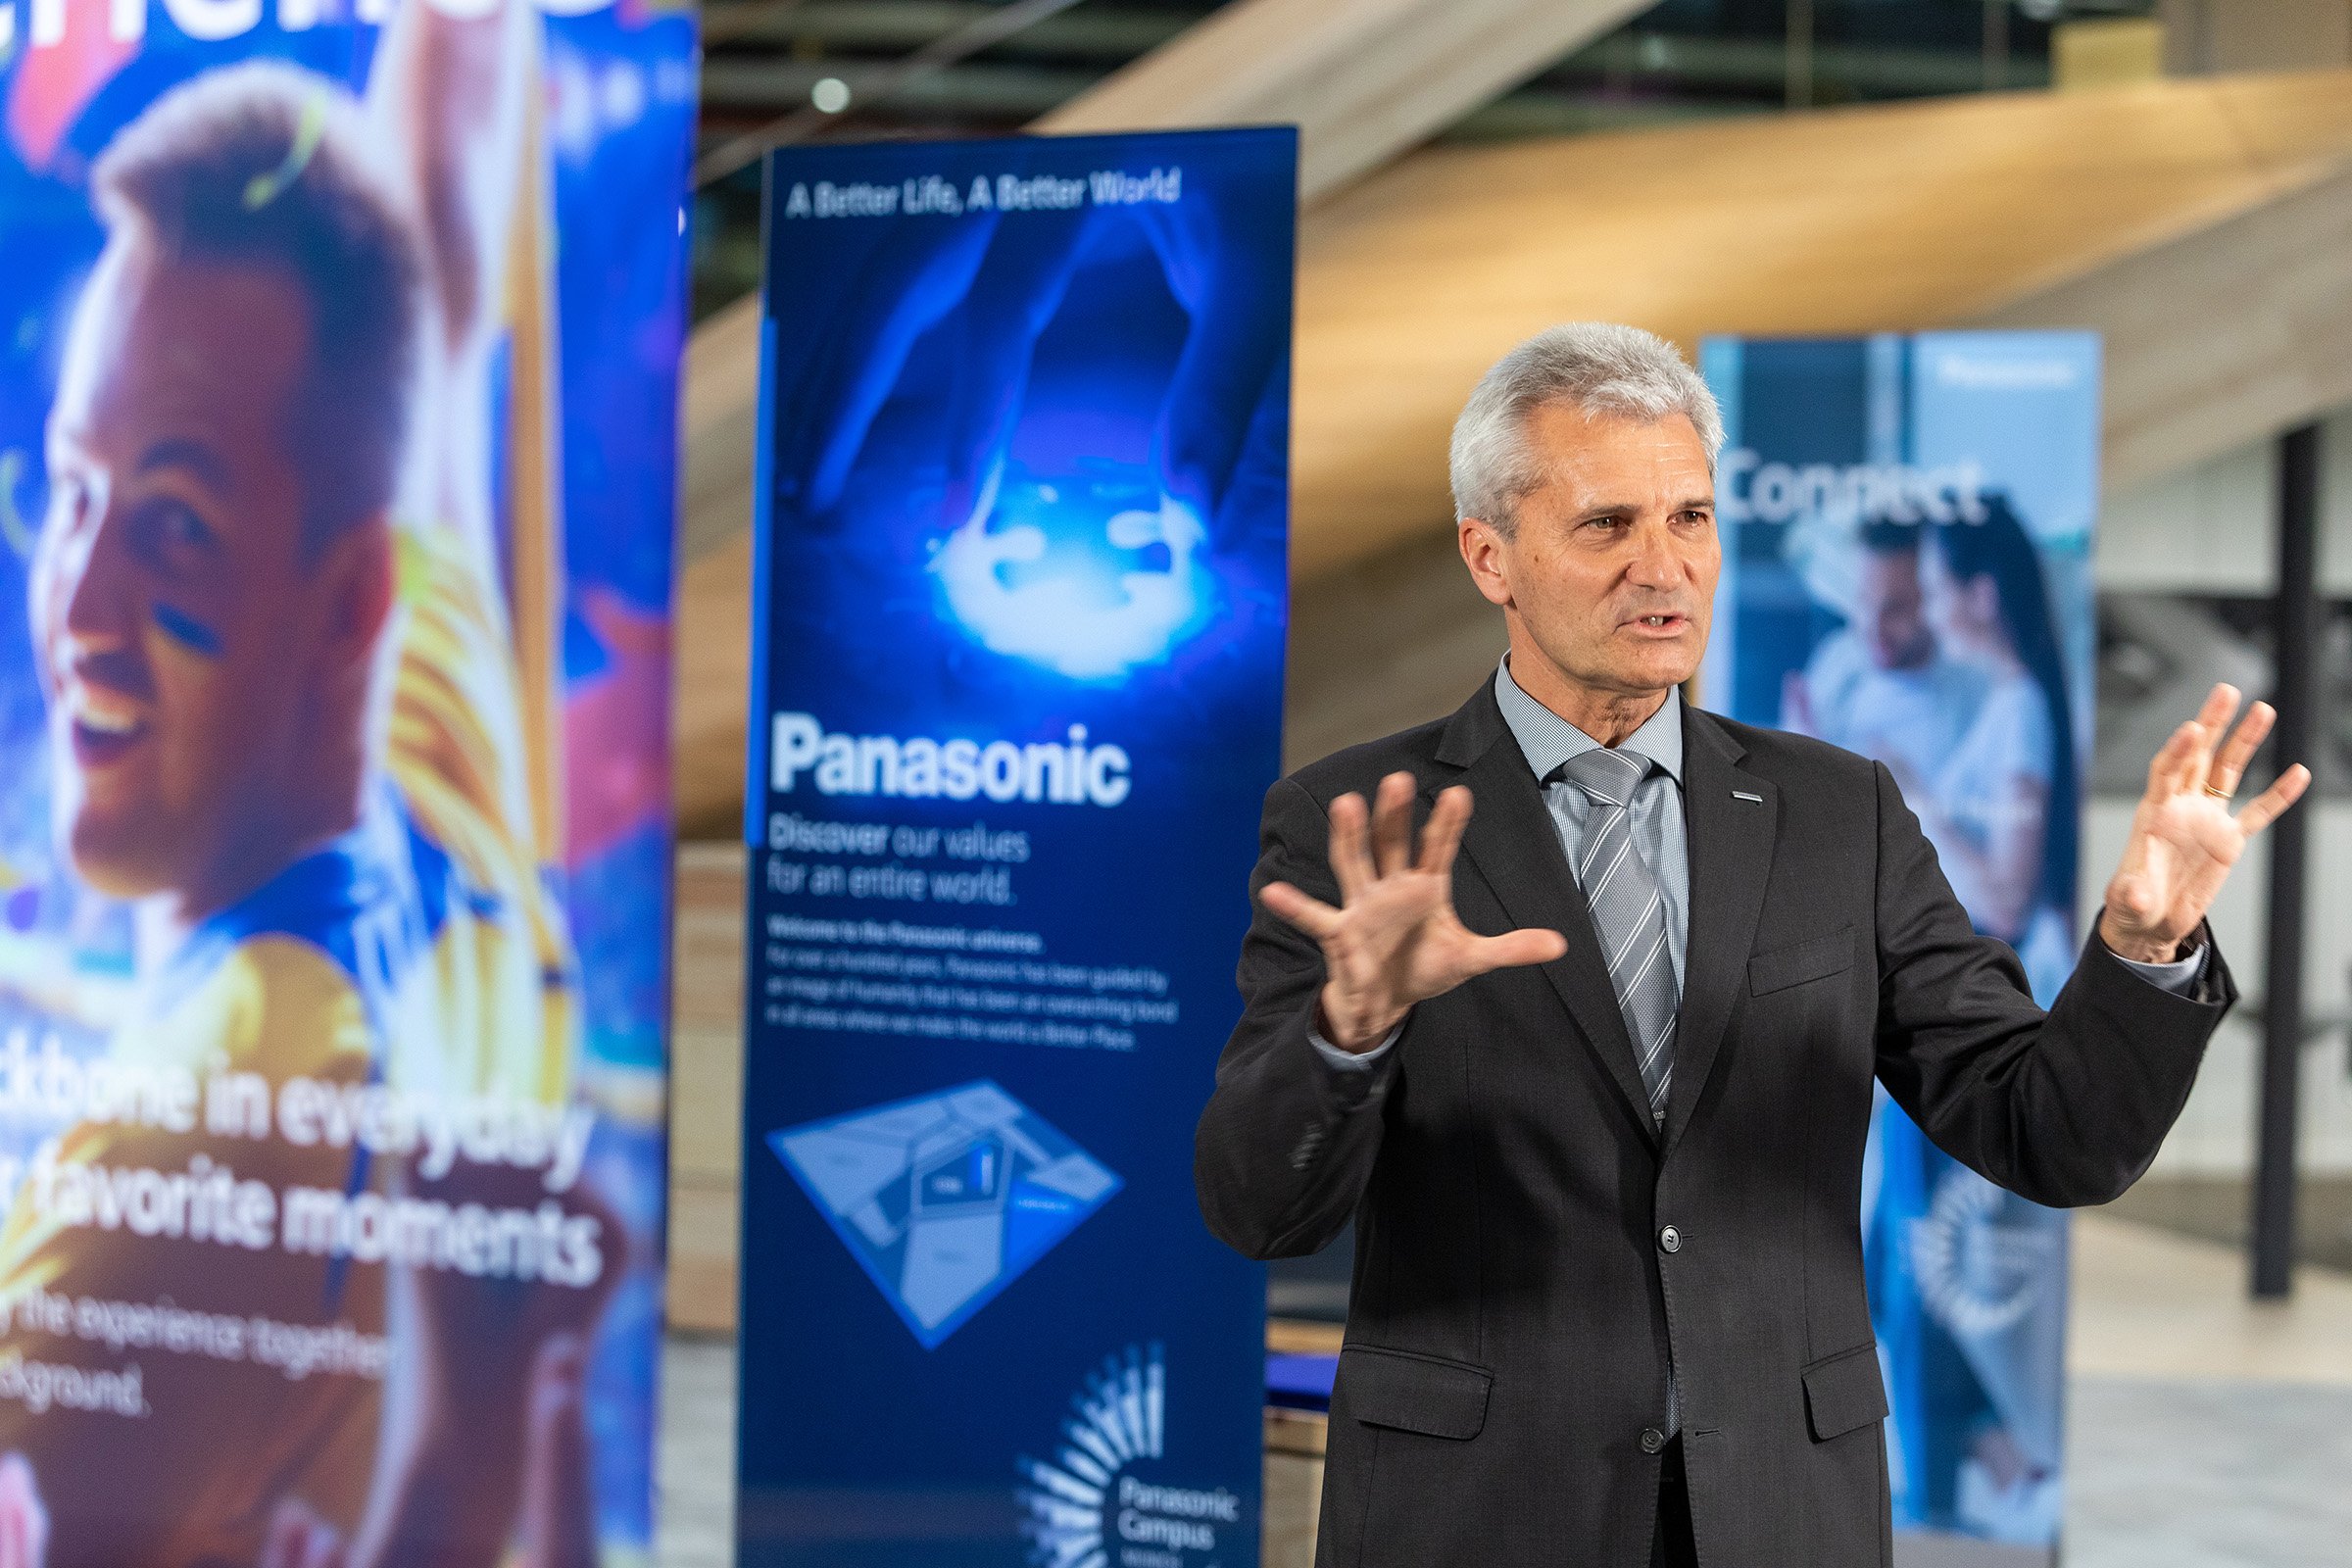 Photo: Johannes Spatz, President of Panasonic Industry Europe